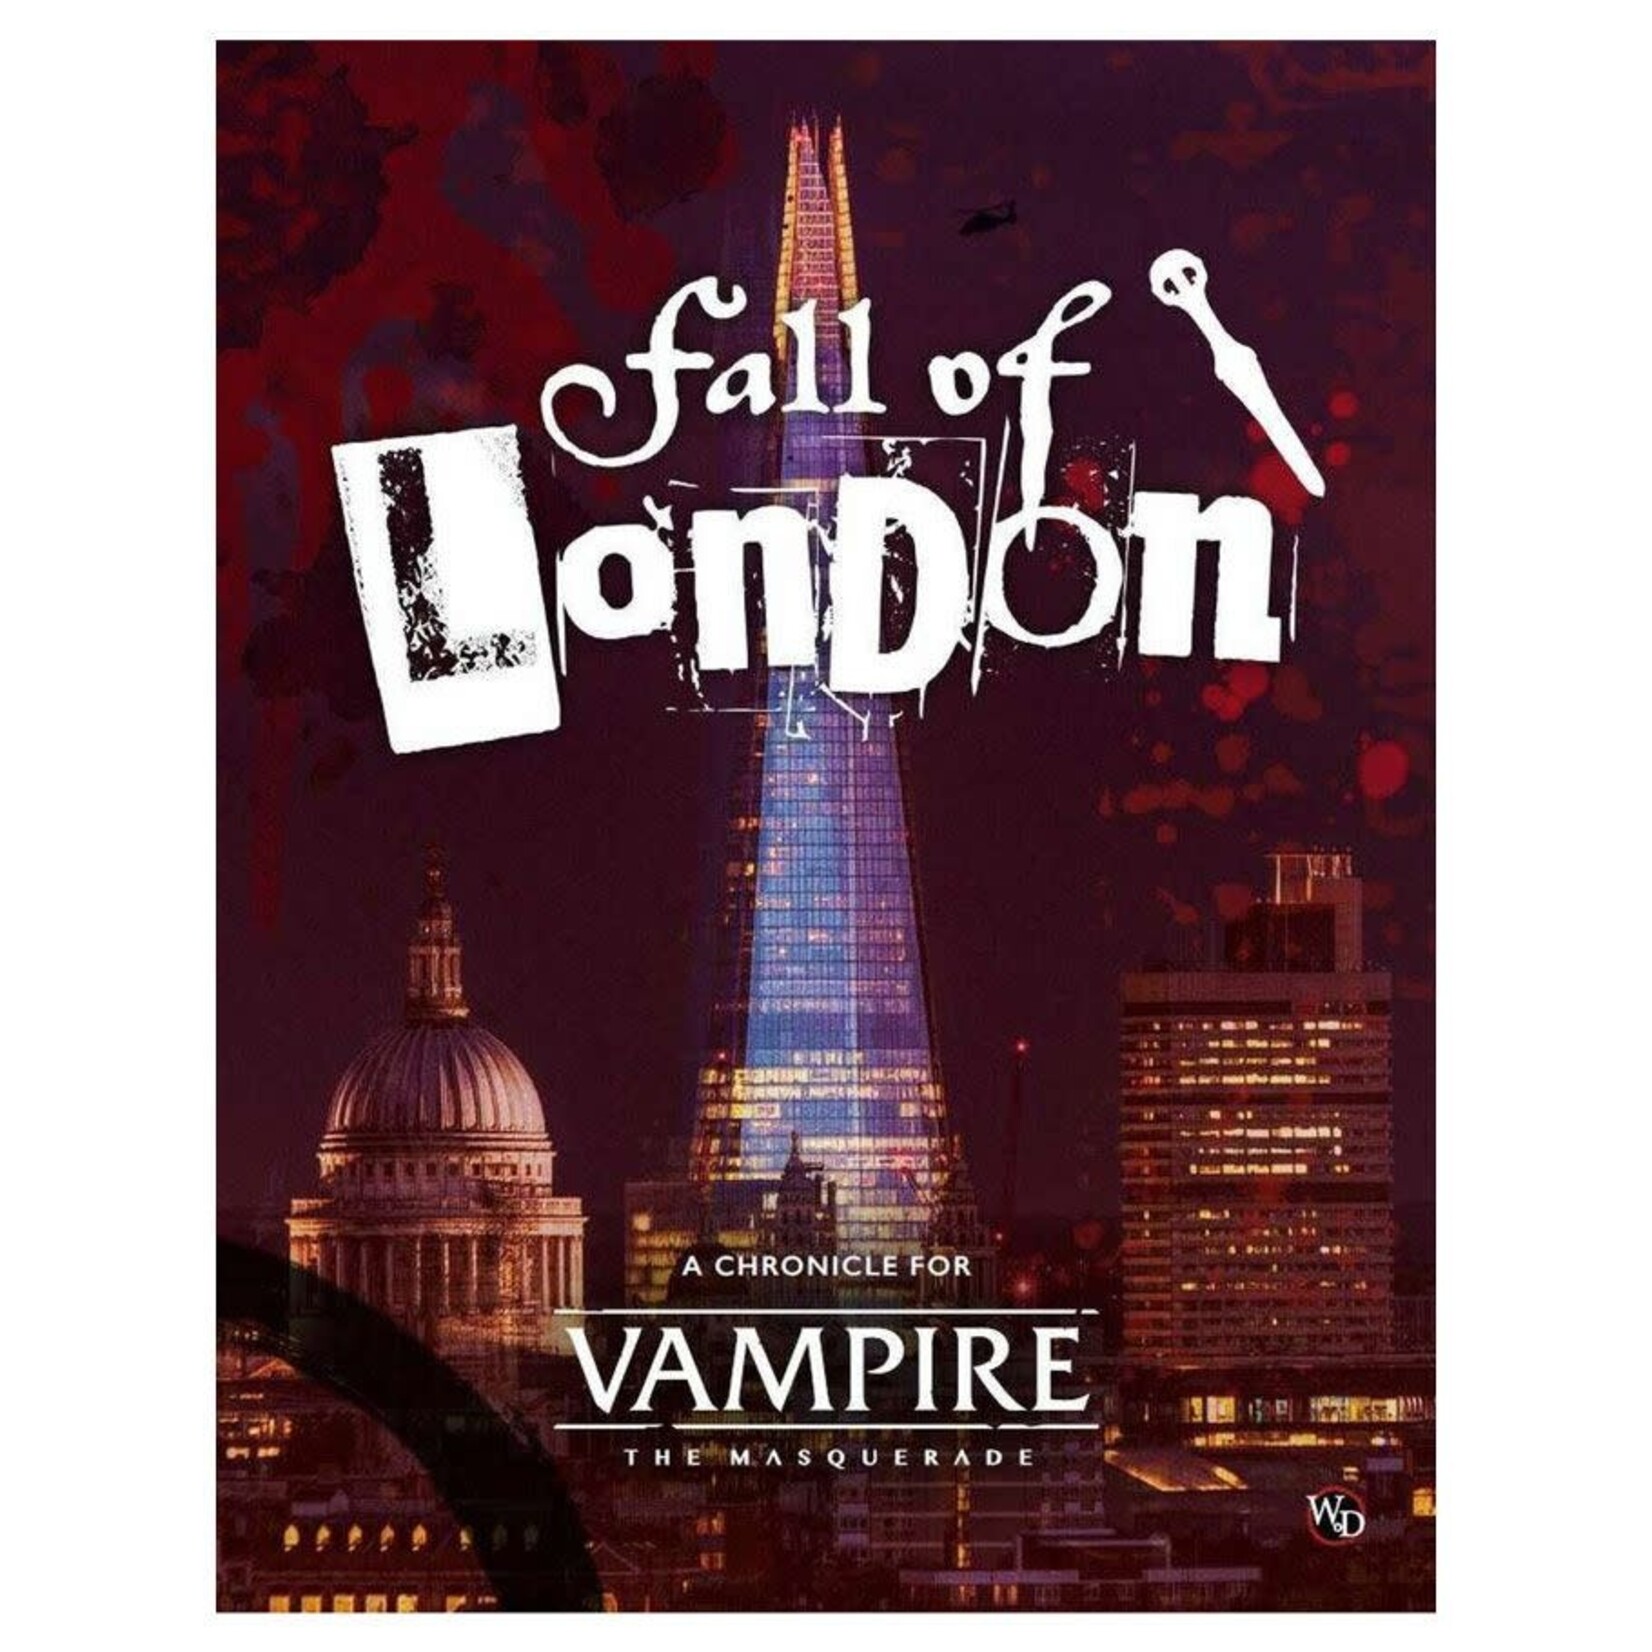 Renegade Game Studio Vampire The Masquerade: 5th Edition RPG: Fall Of London